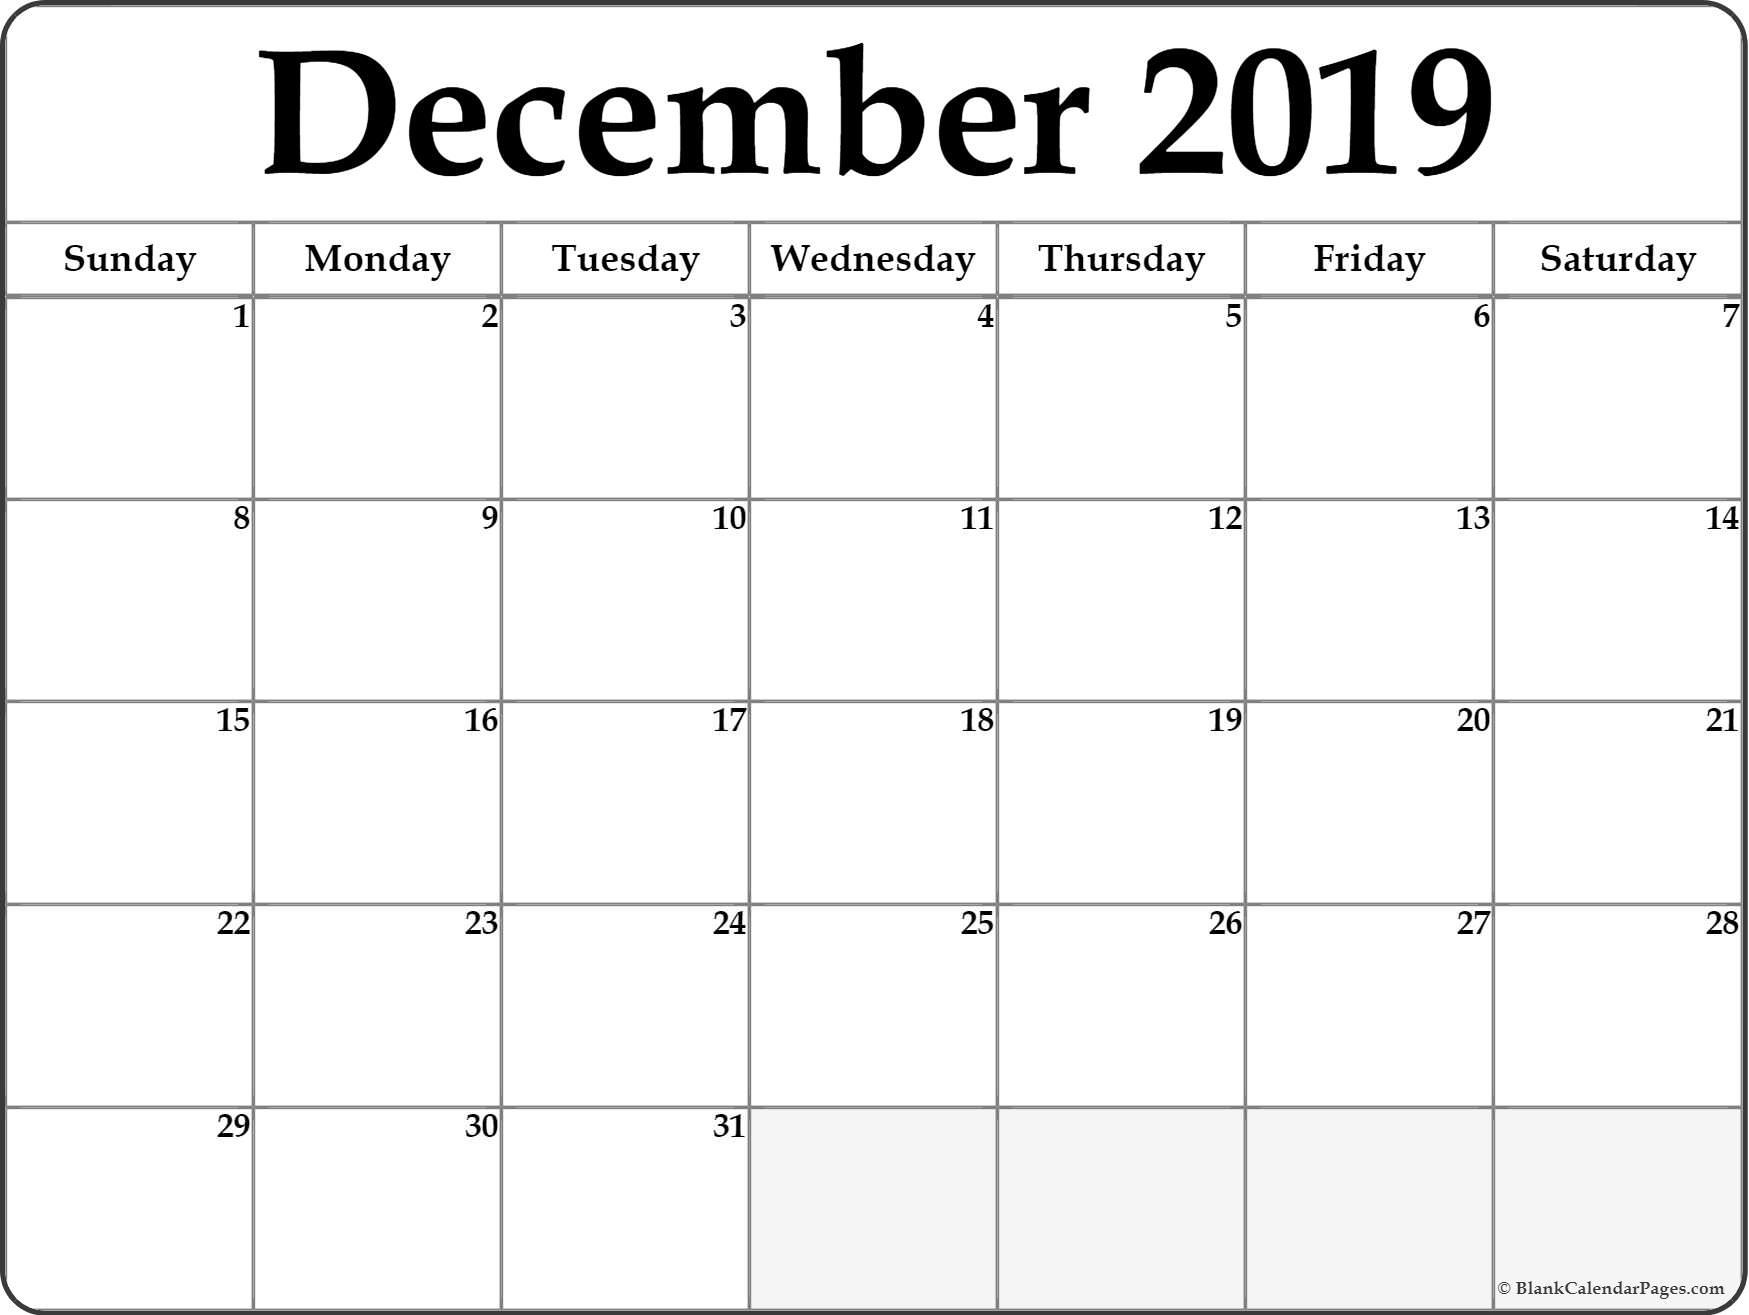 December 2019 Calendar | Free Printable Monthly Calendars Incredible Calendar Printable Black And White